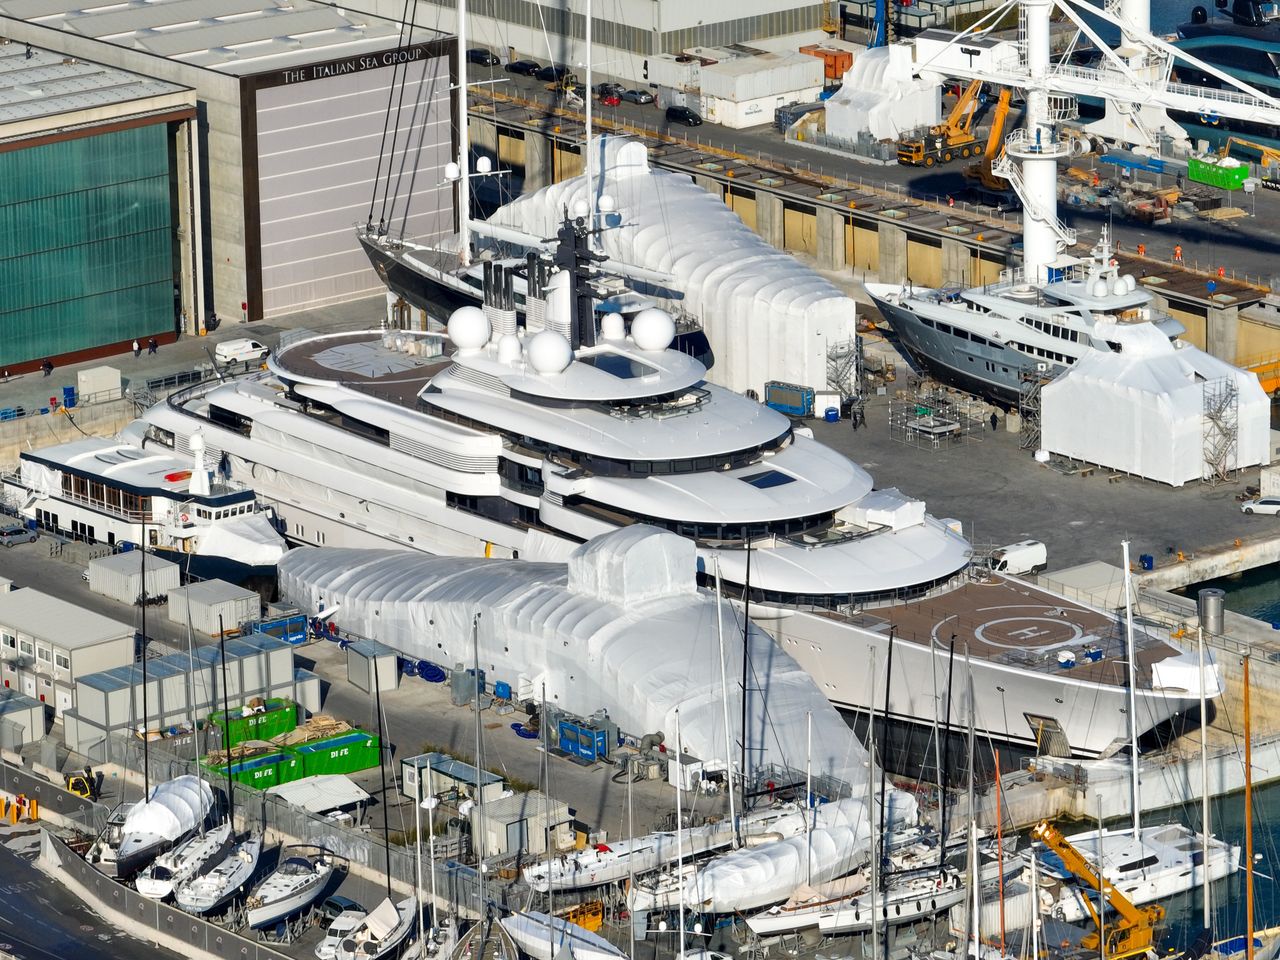 Putin's alleged $700M yacht is ready to set sail. Despite EU sanctions